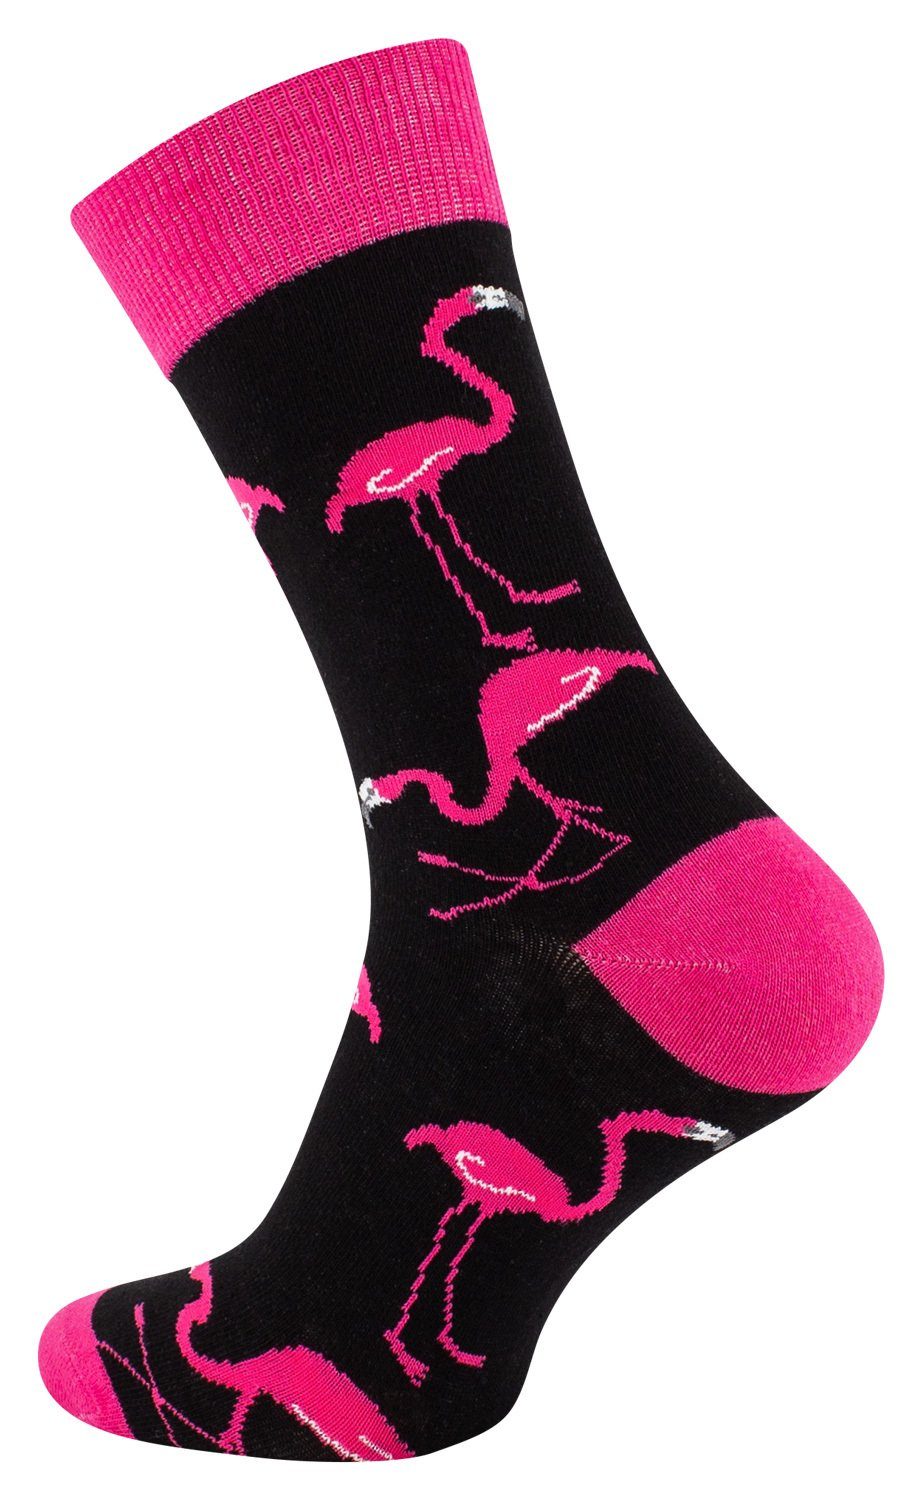 PinkFlamingo Socken Vincent lustigen bunten Creation® mit Motiven